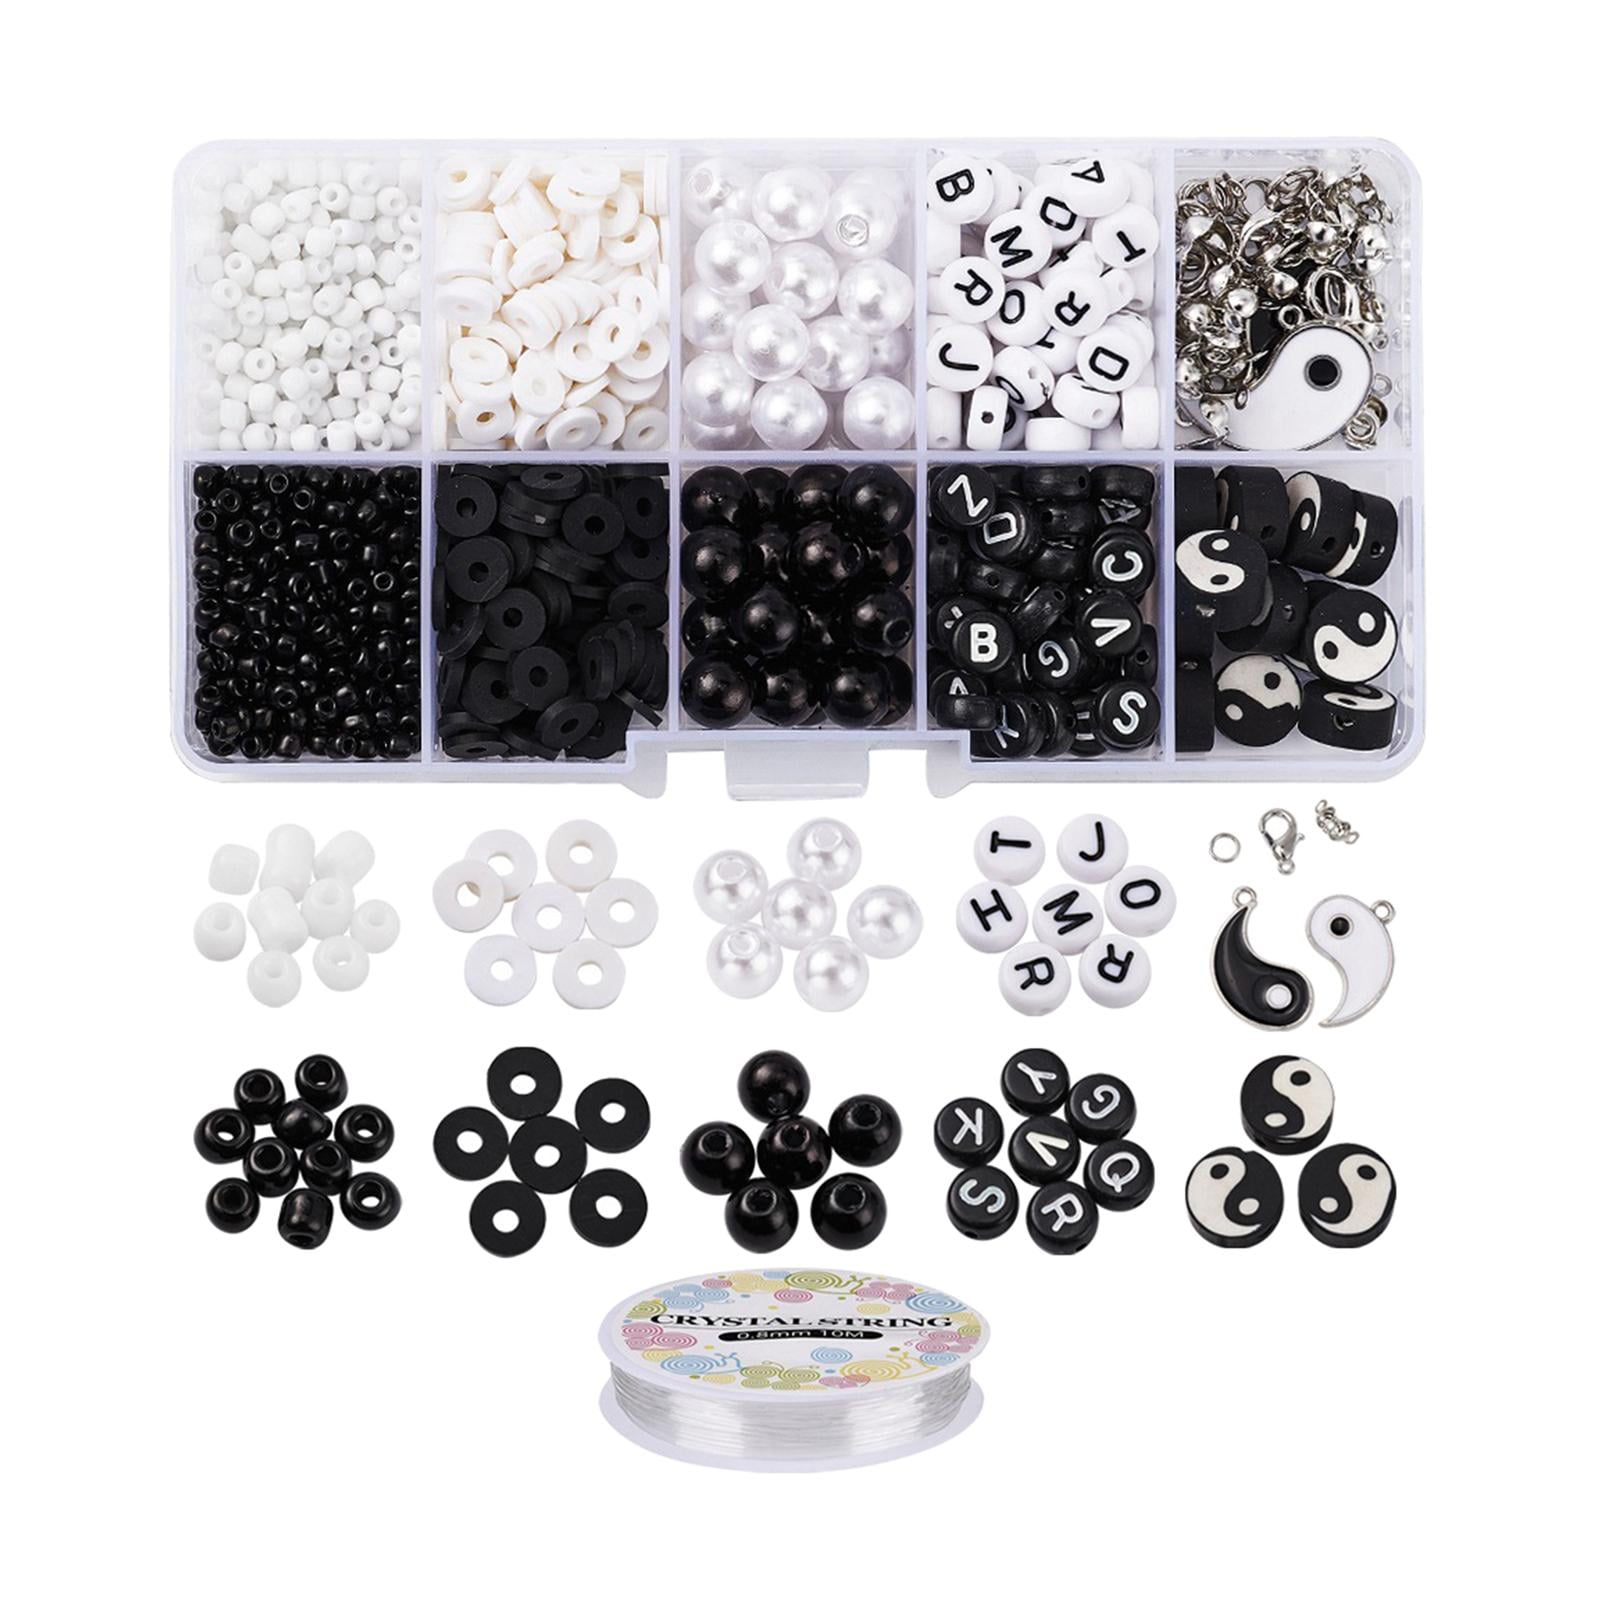 2530 PCS Clay Beads Bracelet Making Kit, Black and White Clay Beads,  Friendship Bracelet Kit, 2 Rolls of 10 Meters Black and White Elastic Rope,  7MM